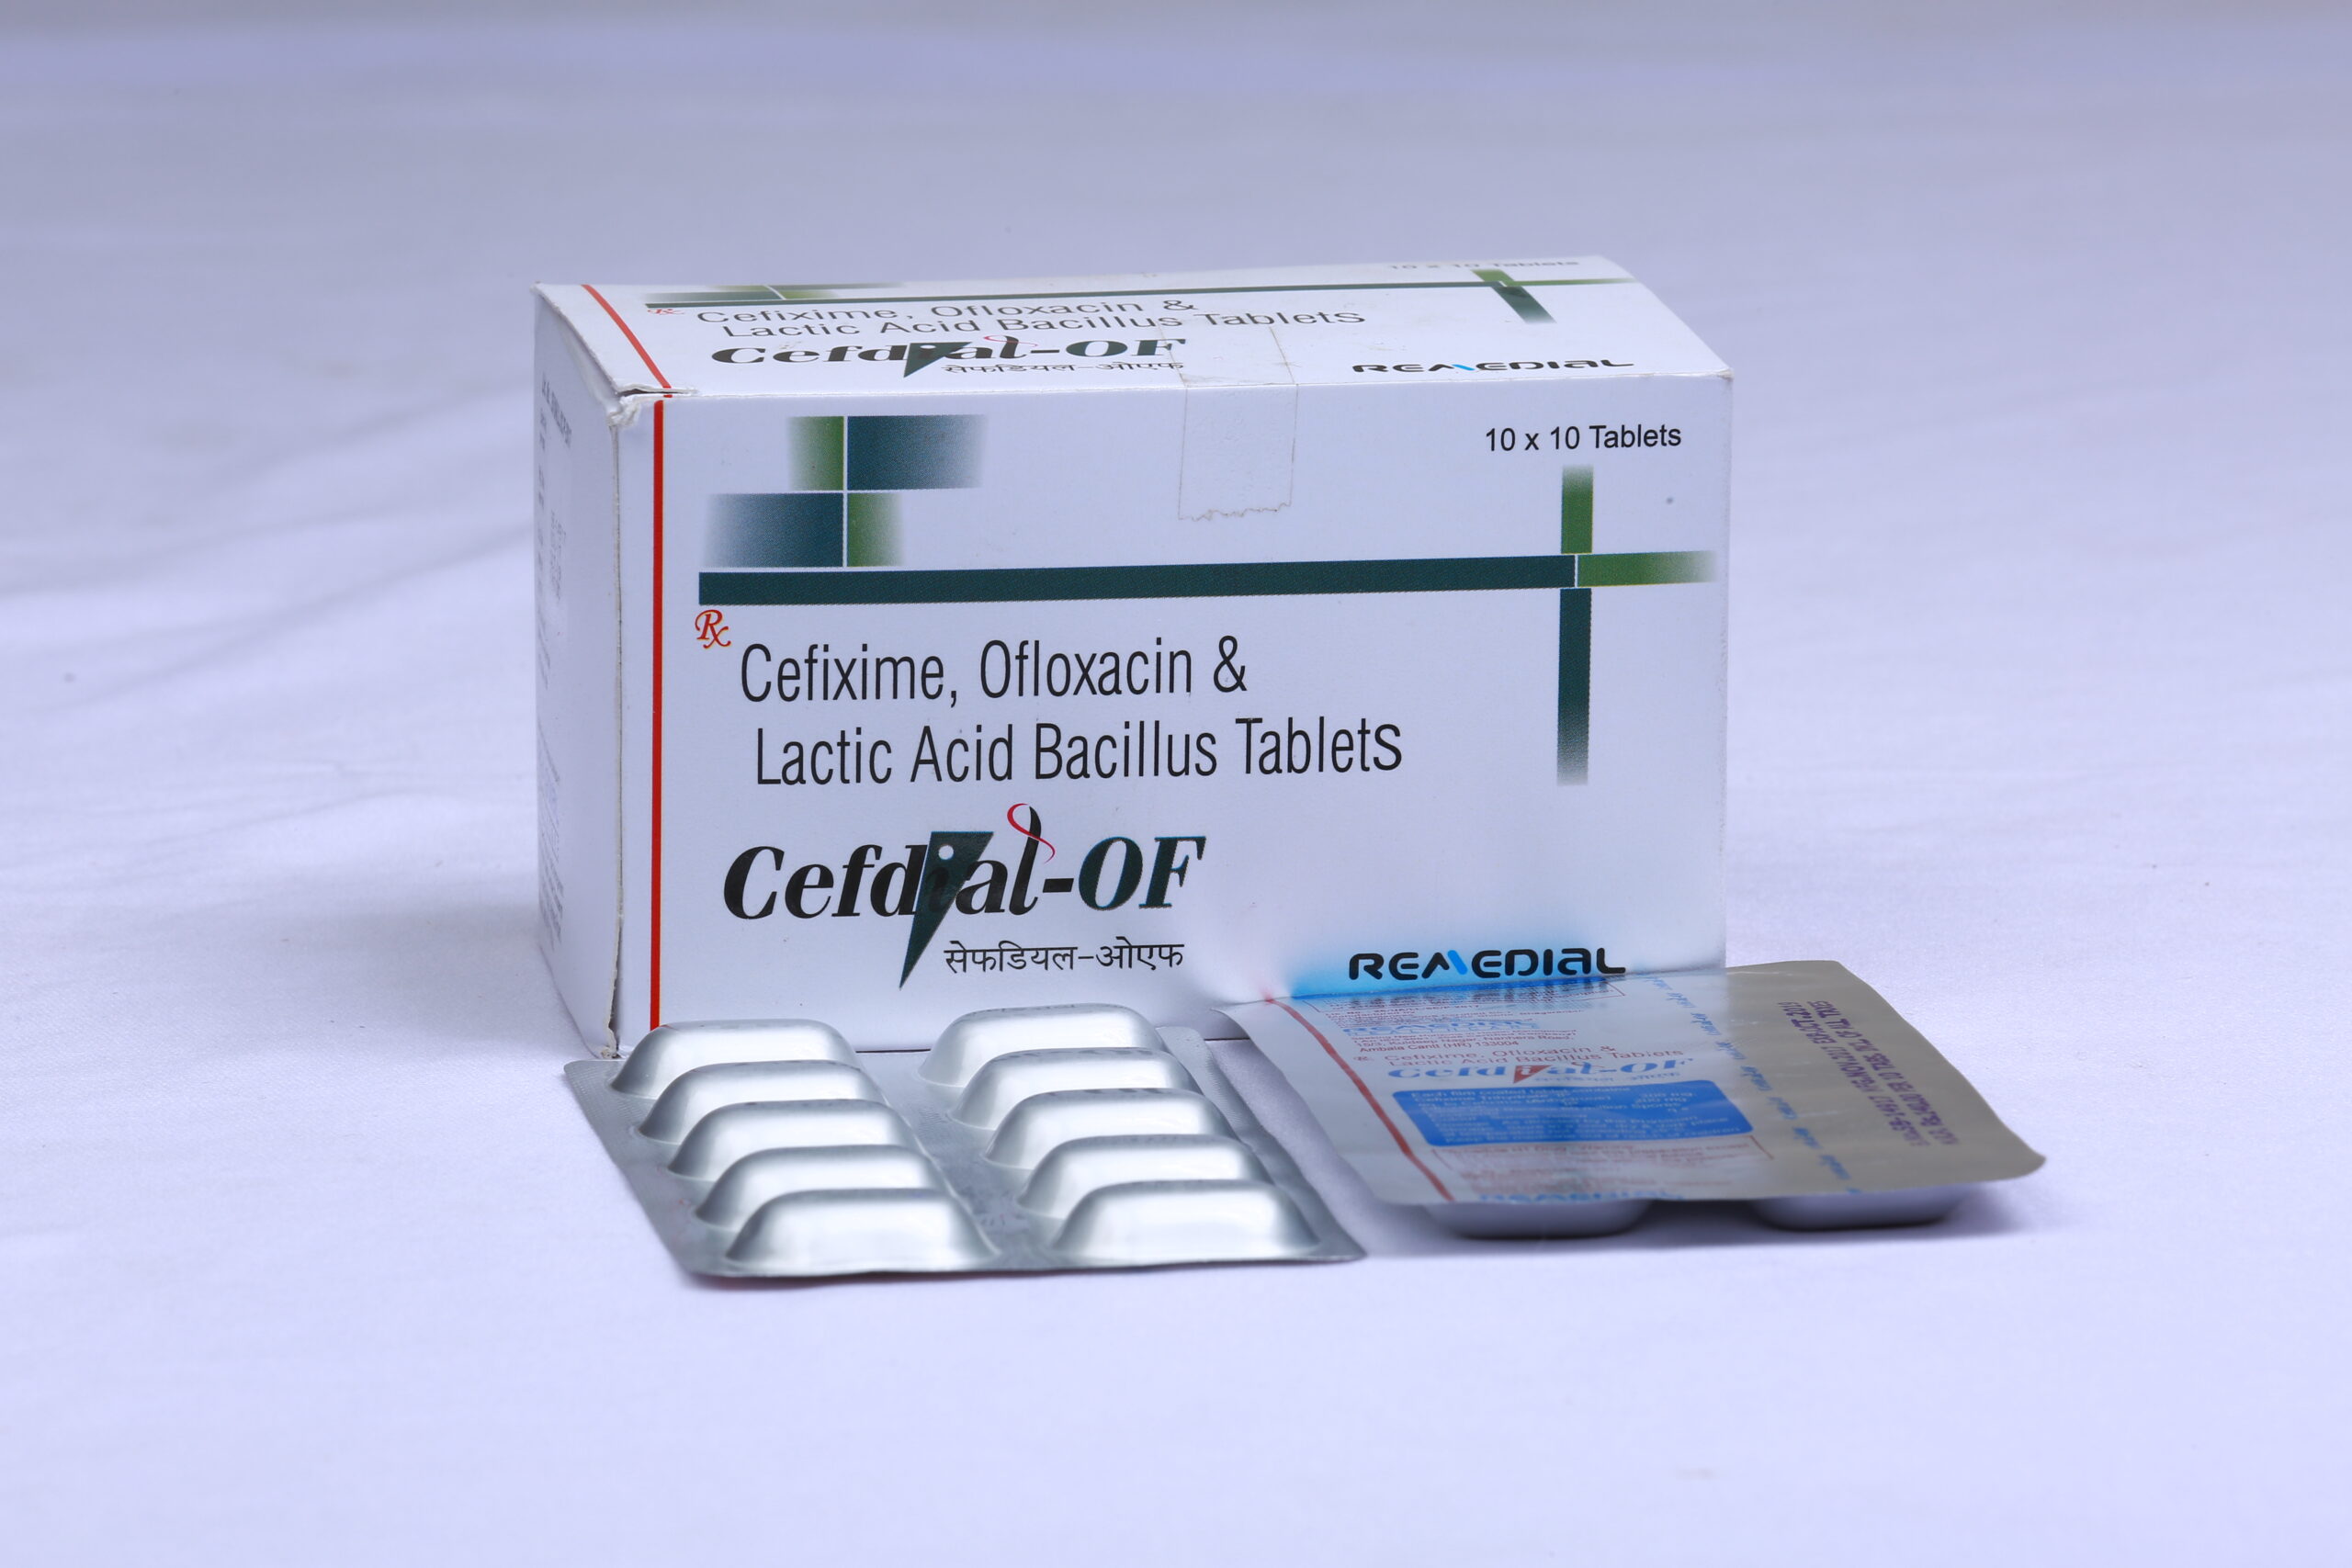 CEFDIAL-OF (Cefixime 200 mg. + Ofloxacin 200mg + Lactic Acid Bacillus)